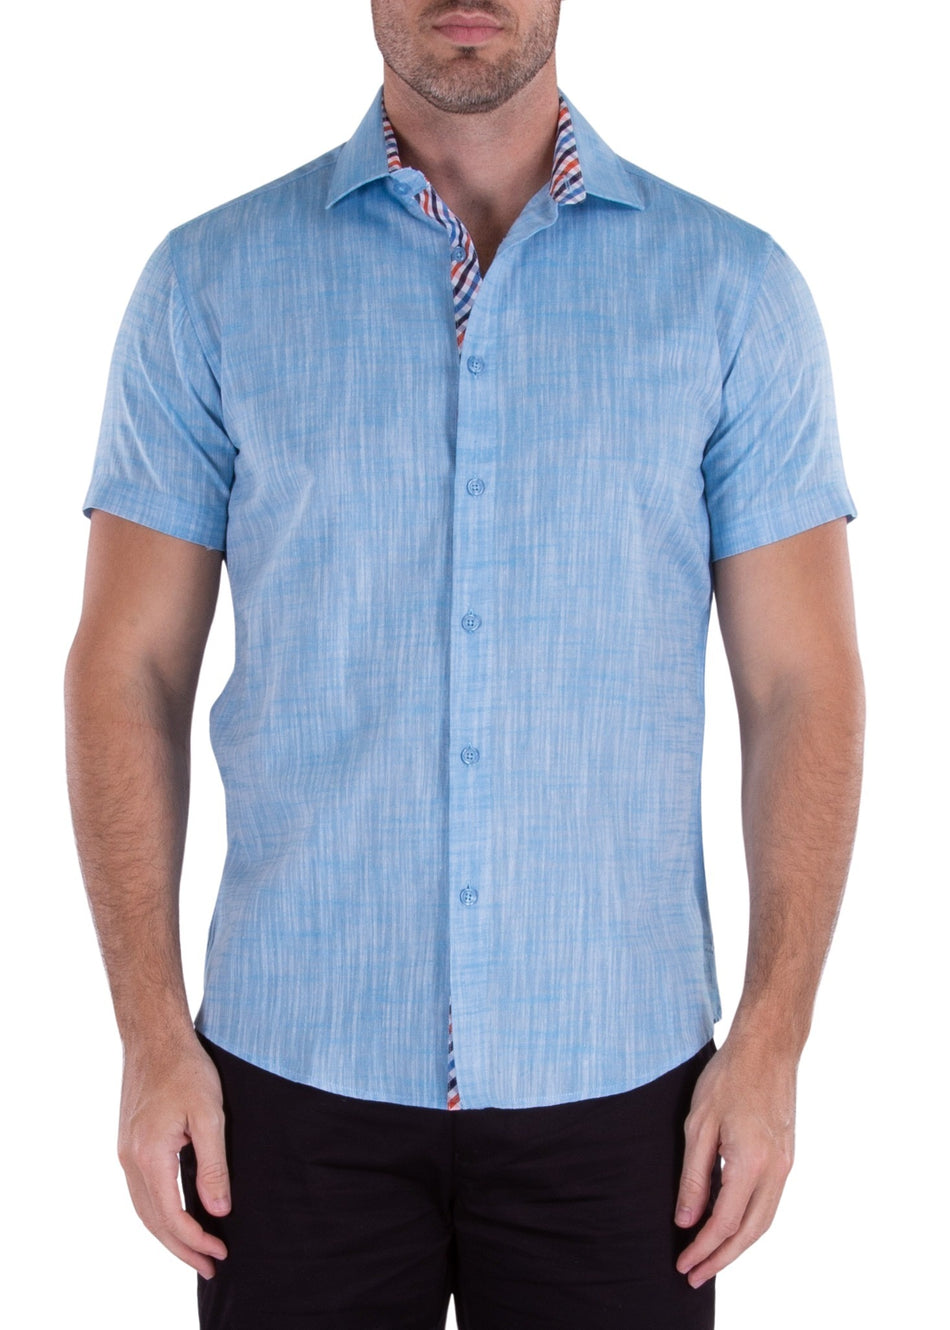 202120 - Turquoise Button Up Short Sleeve Dress Shirt